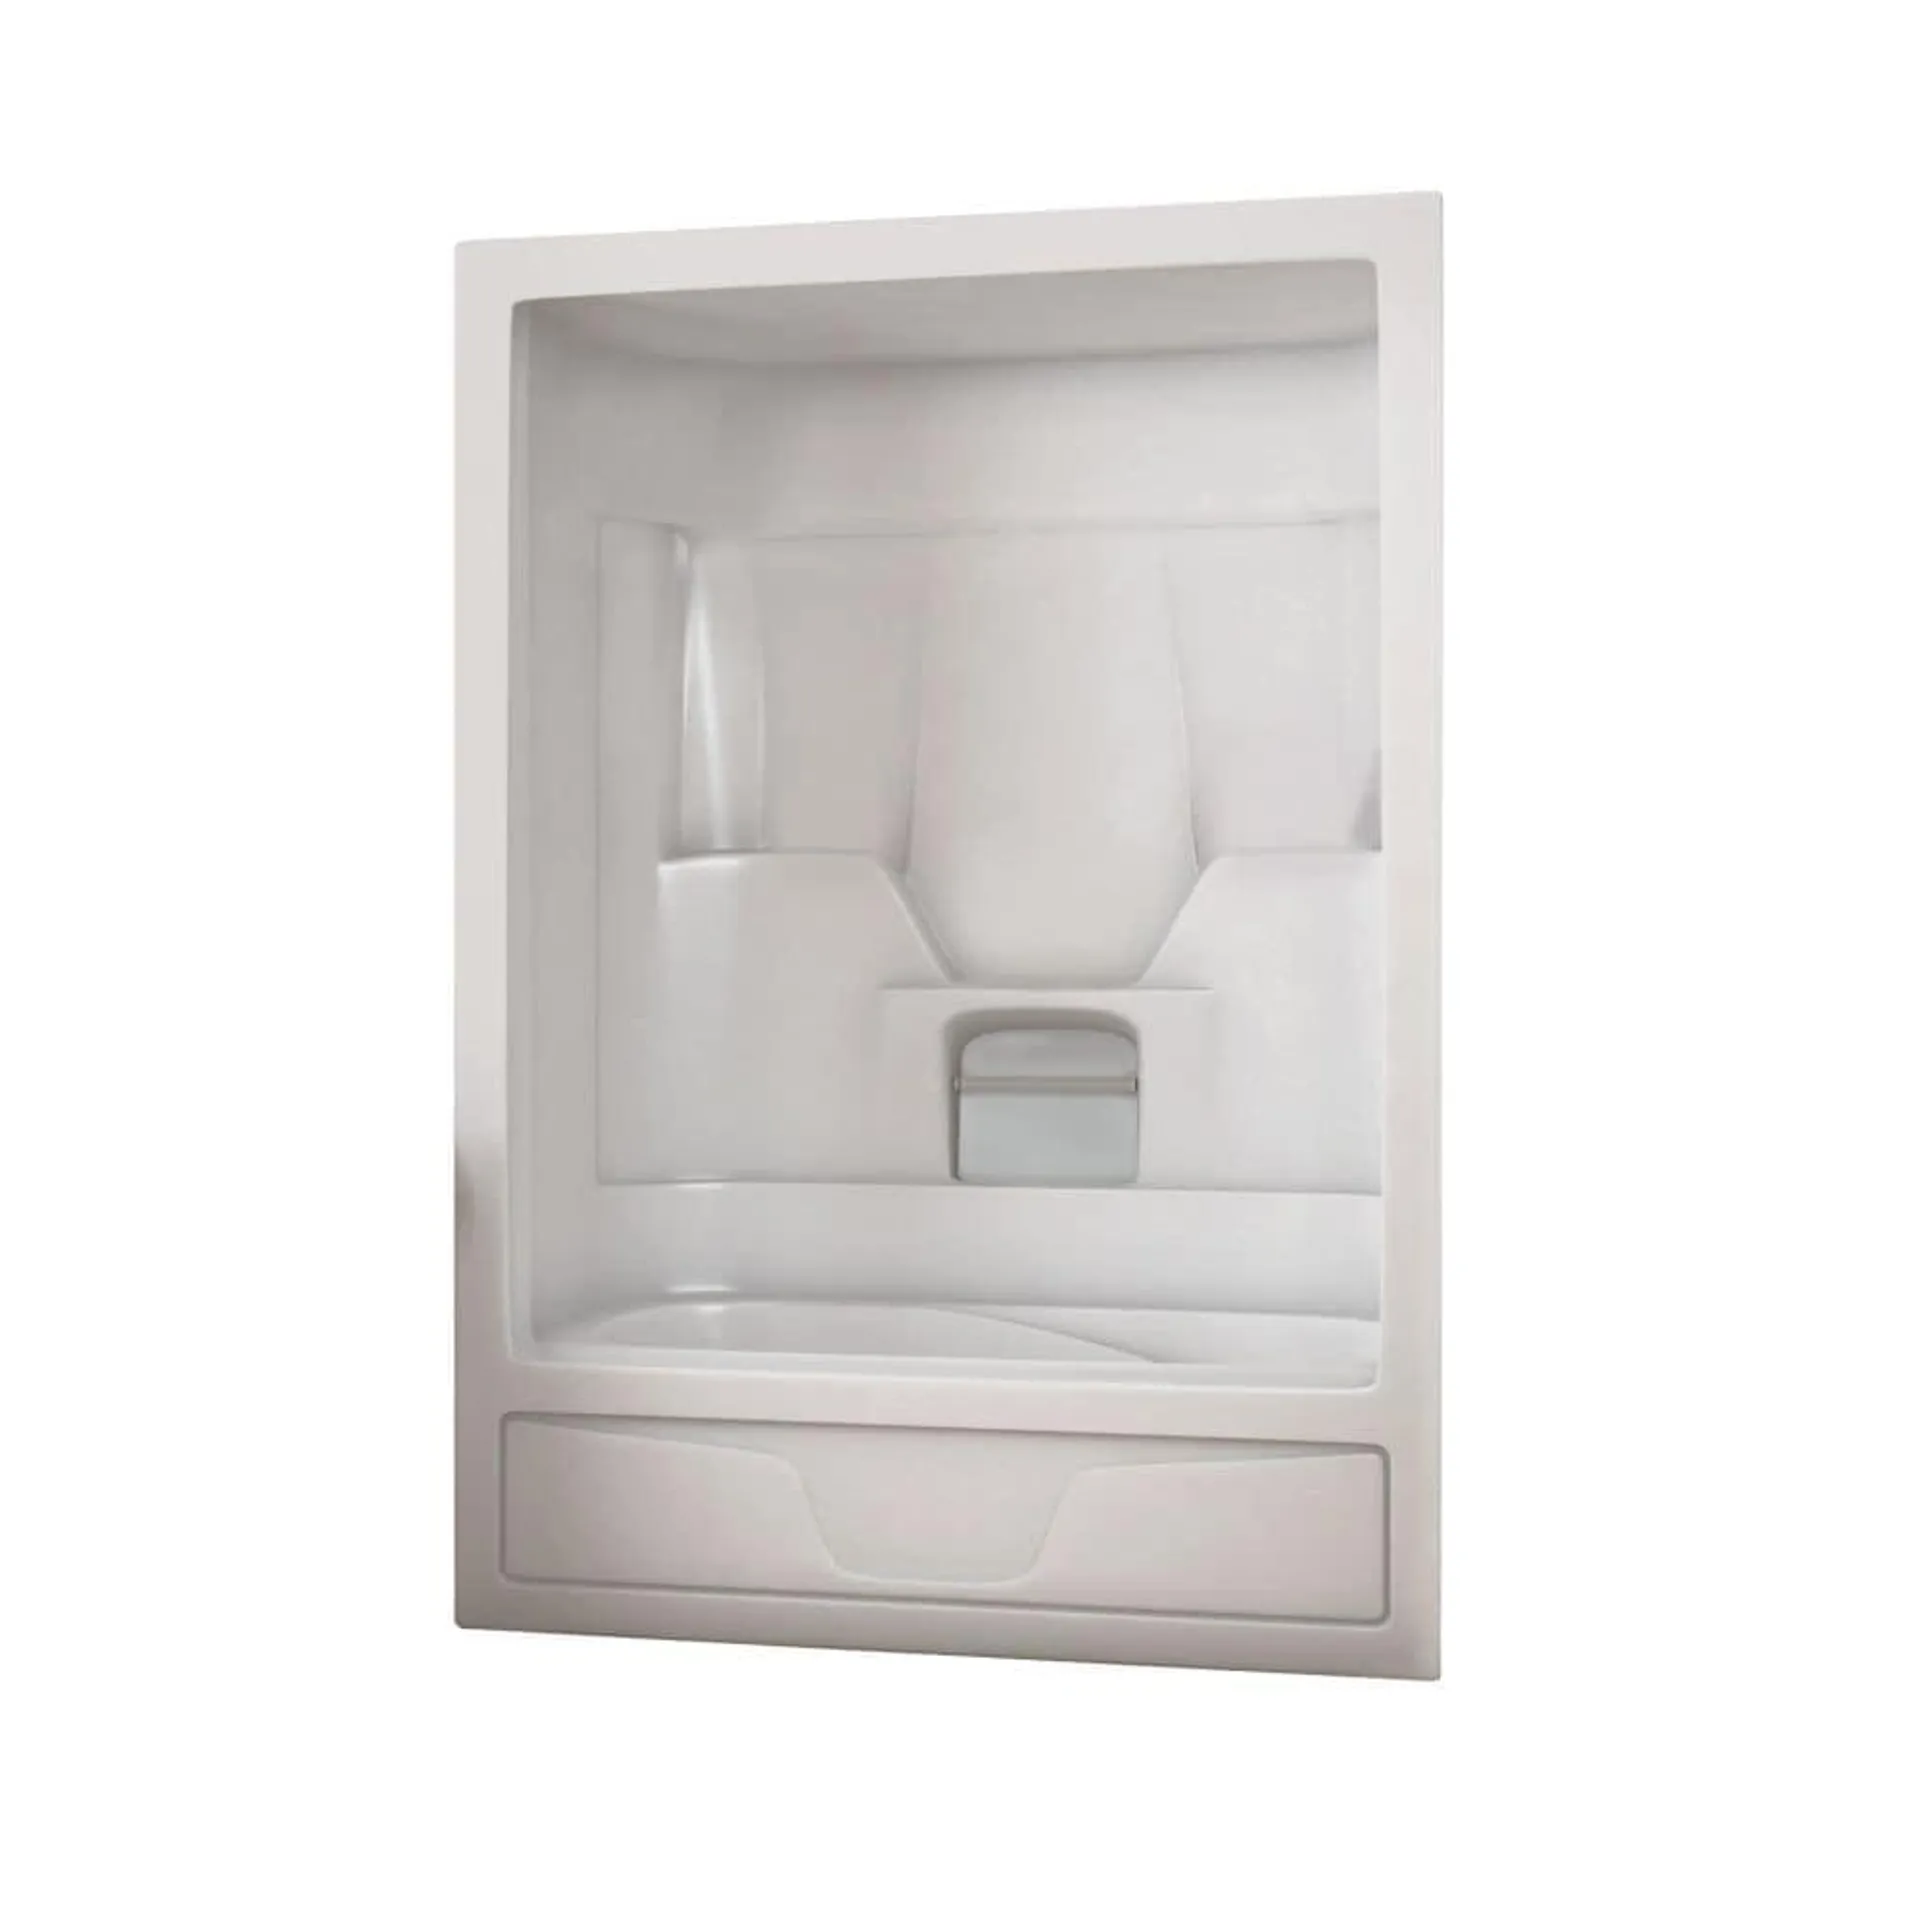 Aspen 60L x 31W x 85H-inch 1-Piece Acrylic Tub Shower Stall with Tub Surround (Built-In Shelves & Towel Bar), Left Drain Bathtub & Roof Cap